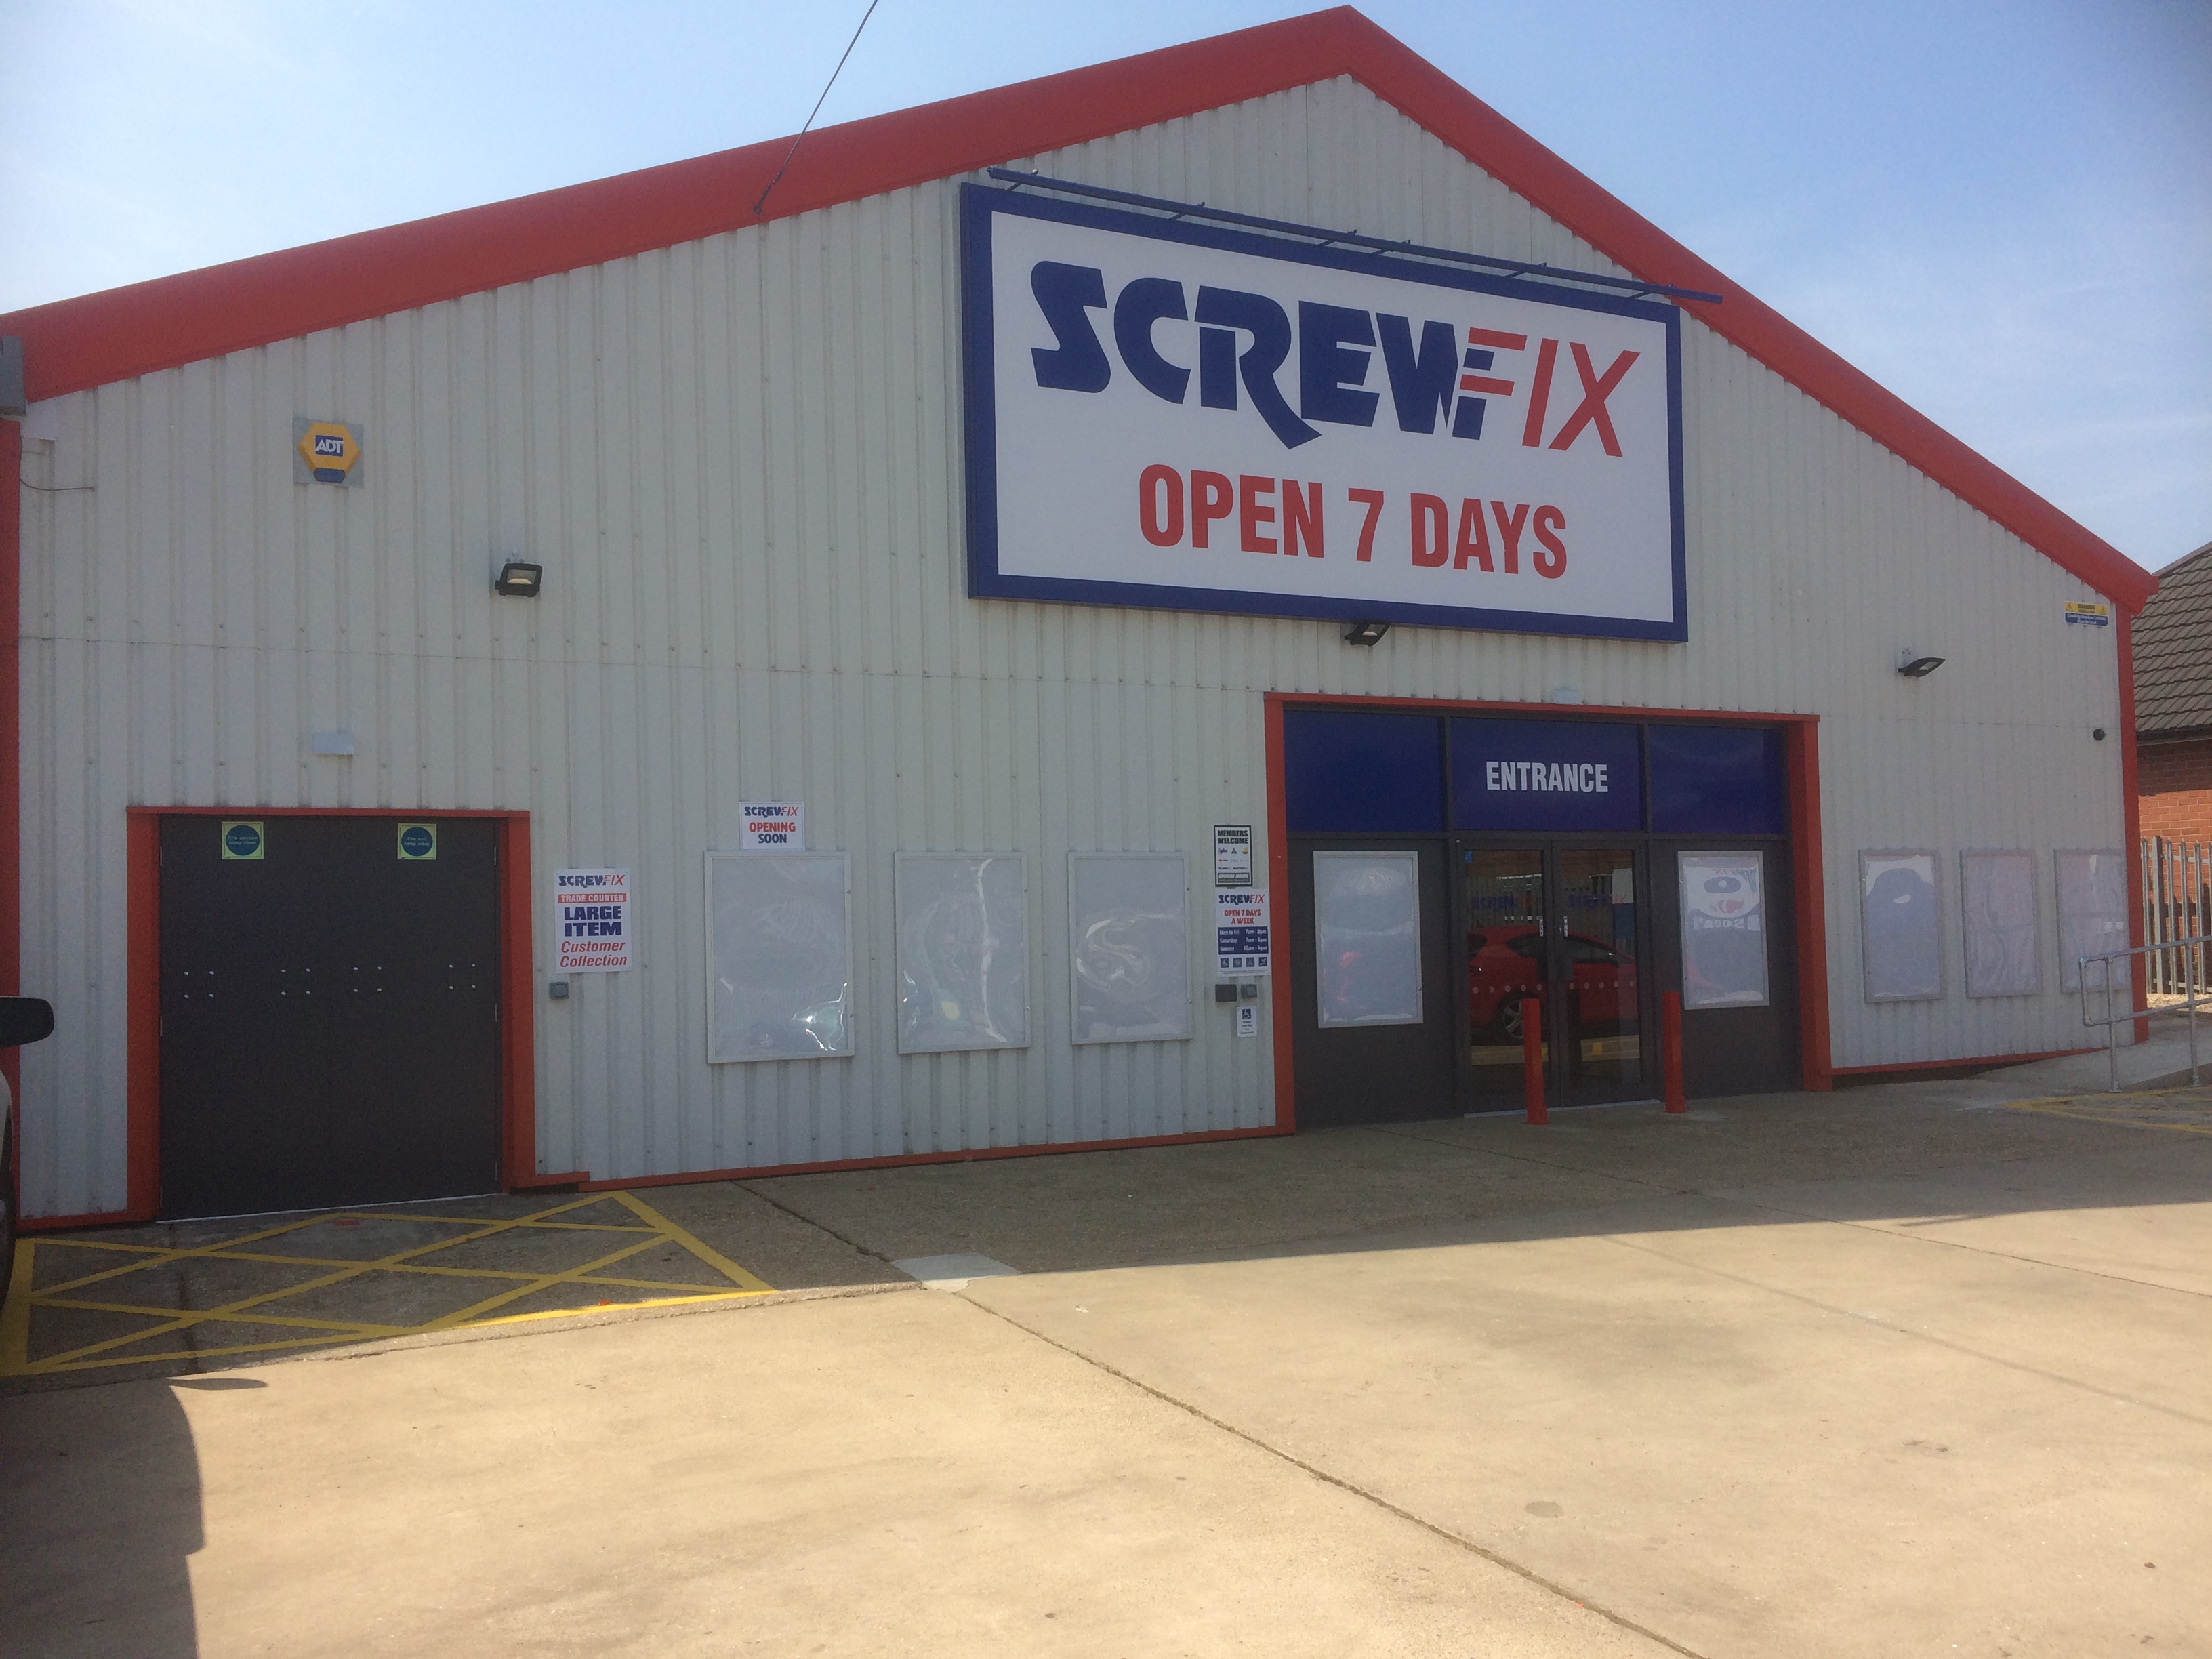 Screwfix 2018 Heating site survey